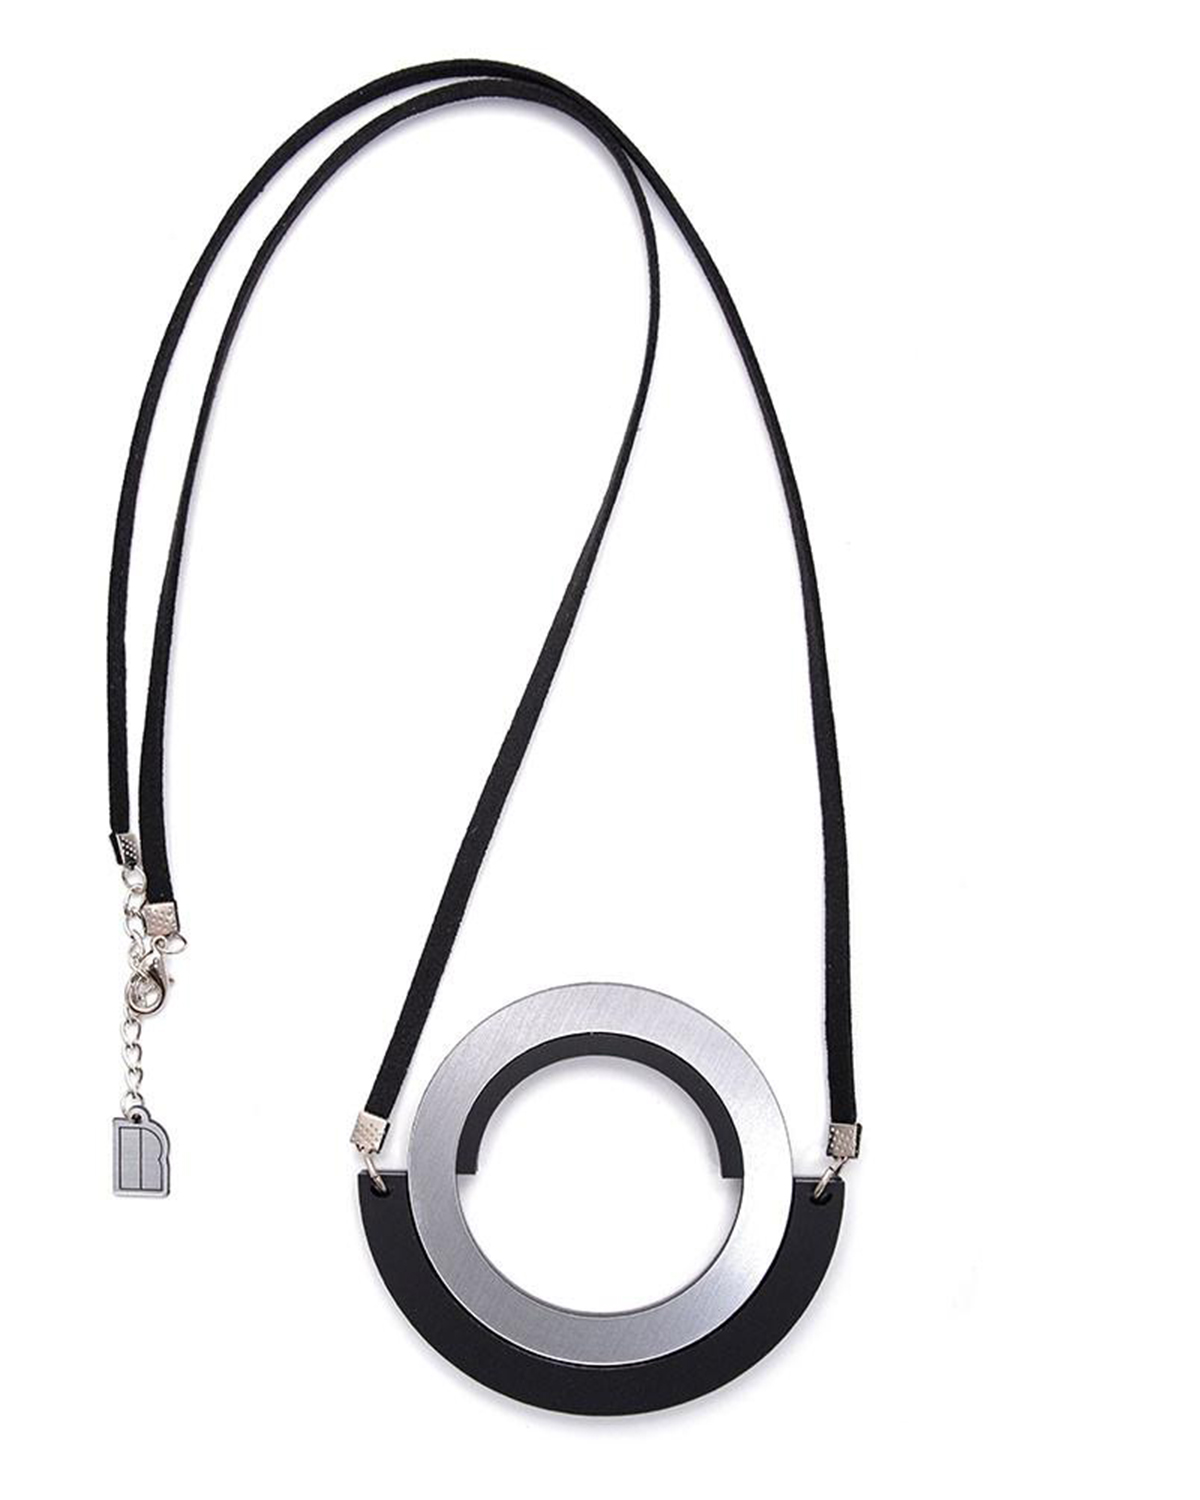 Fullmoon necklace | Lasercut jewelry | Rename | Made in Belgrade